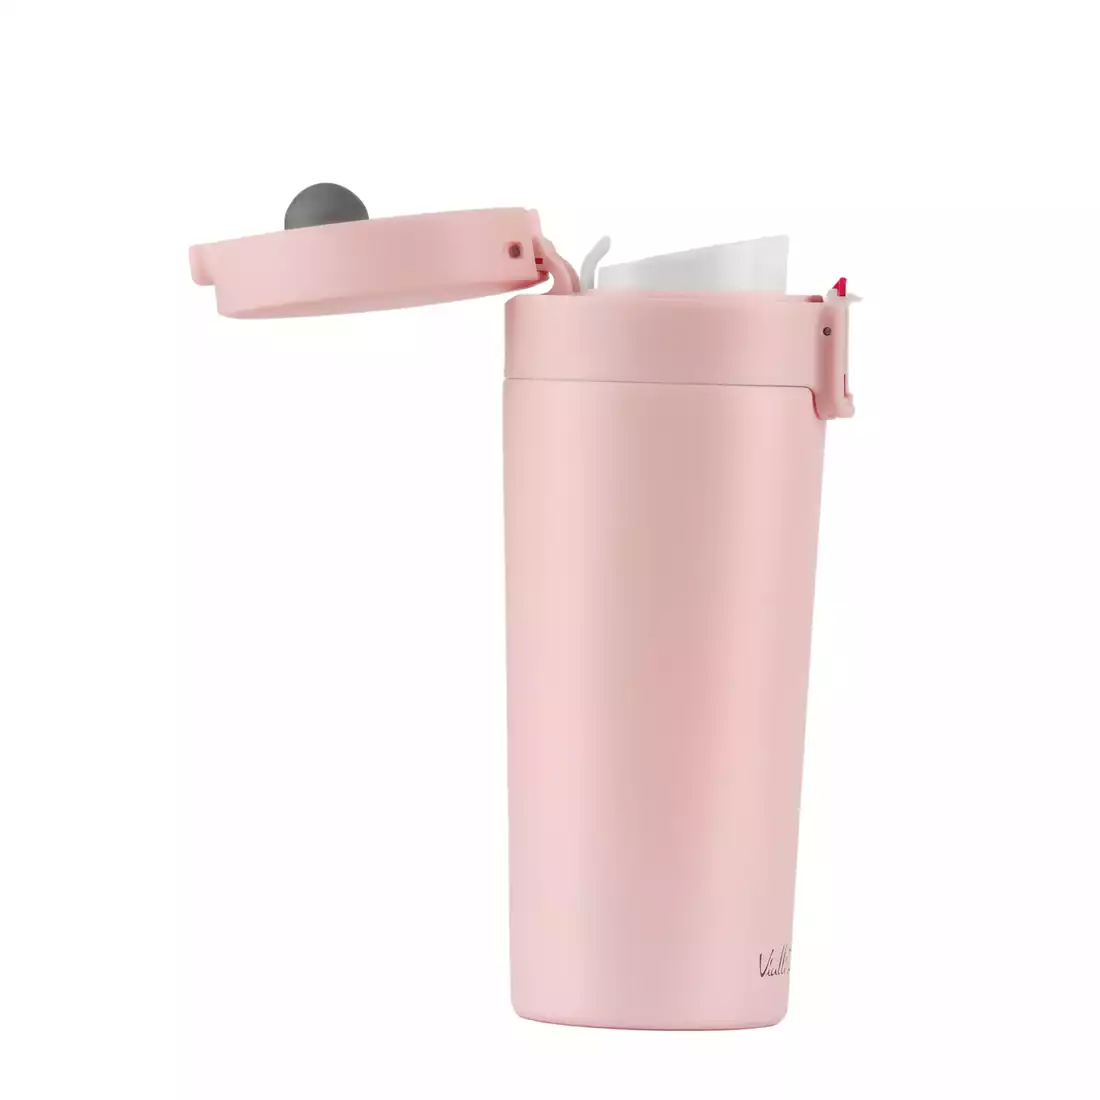 VIALLI DESIGN FUORI thermal mug 400ml, pink